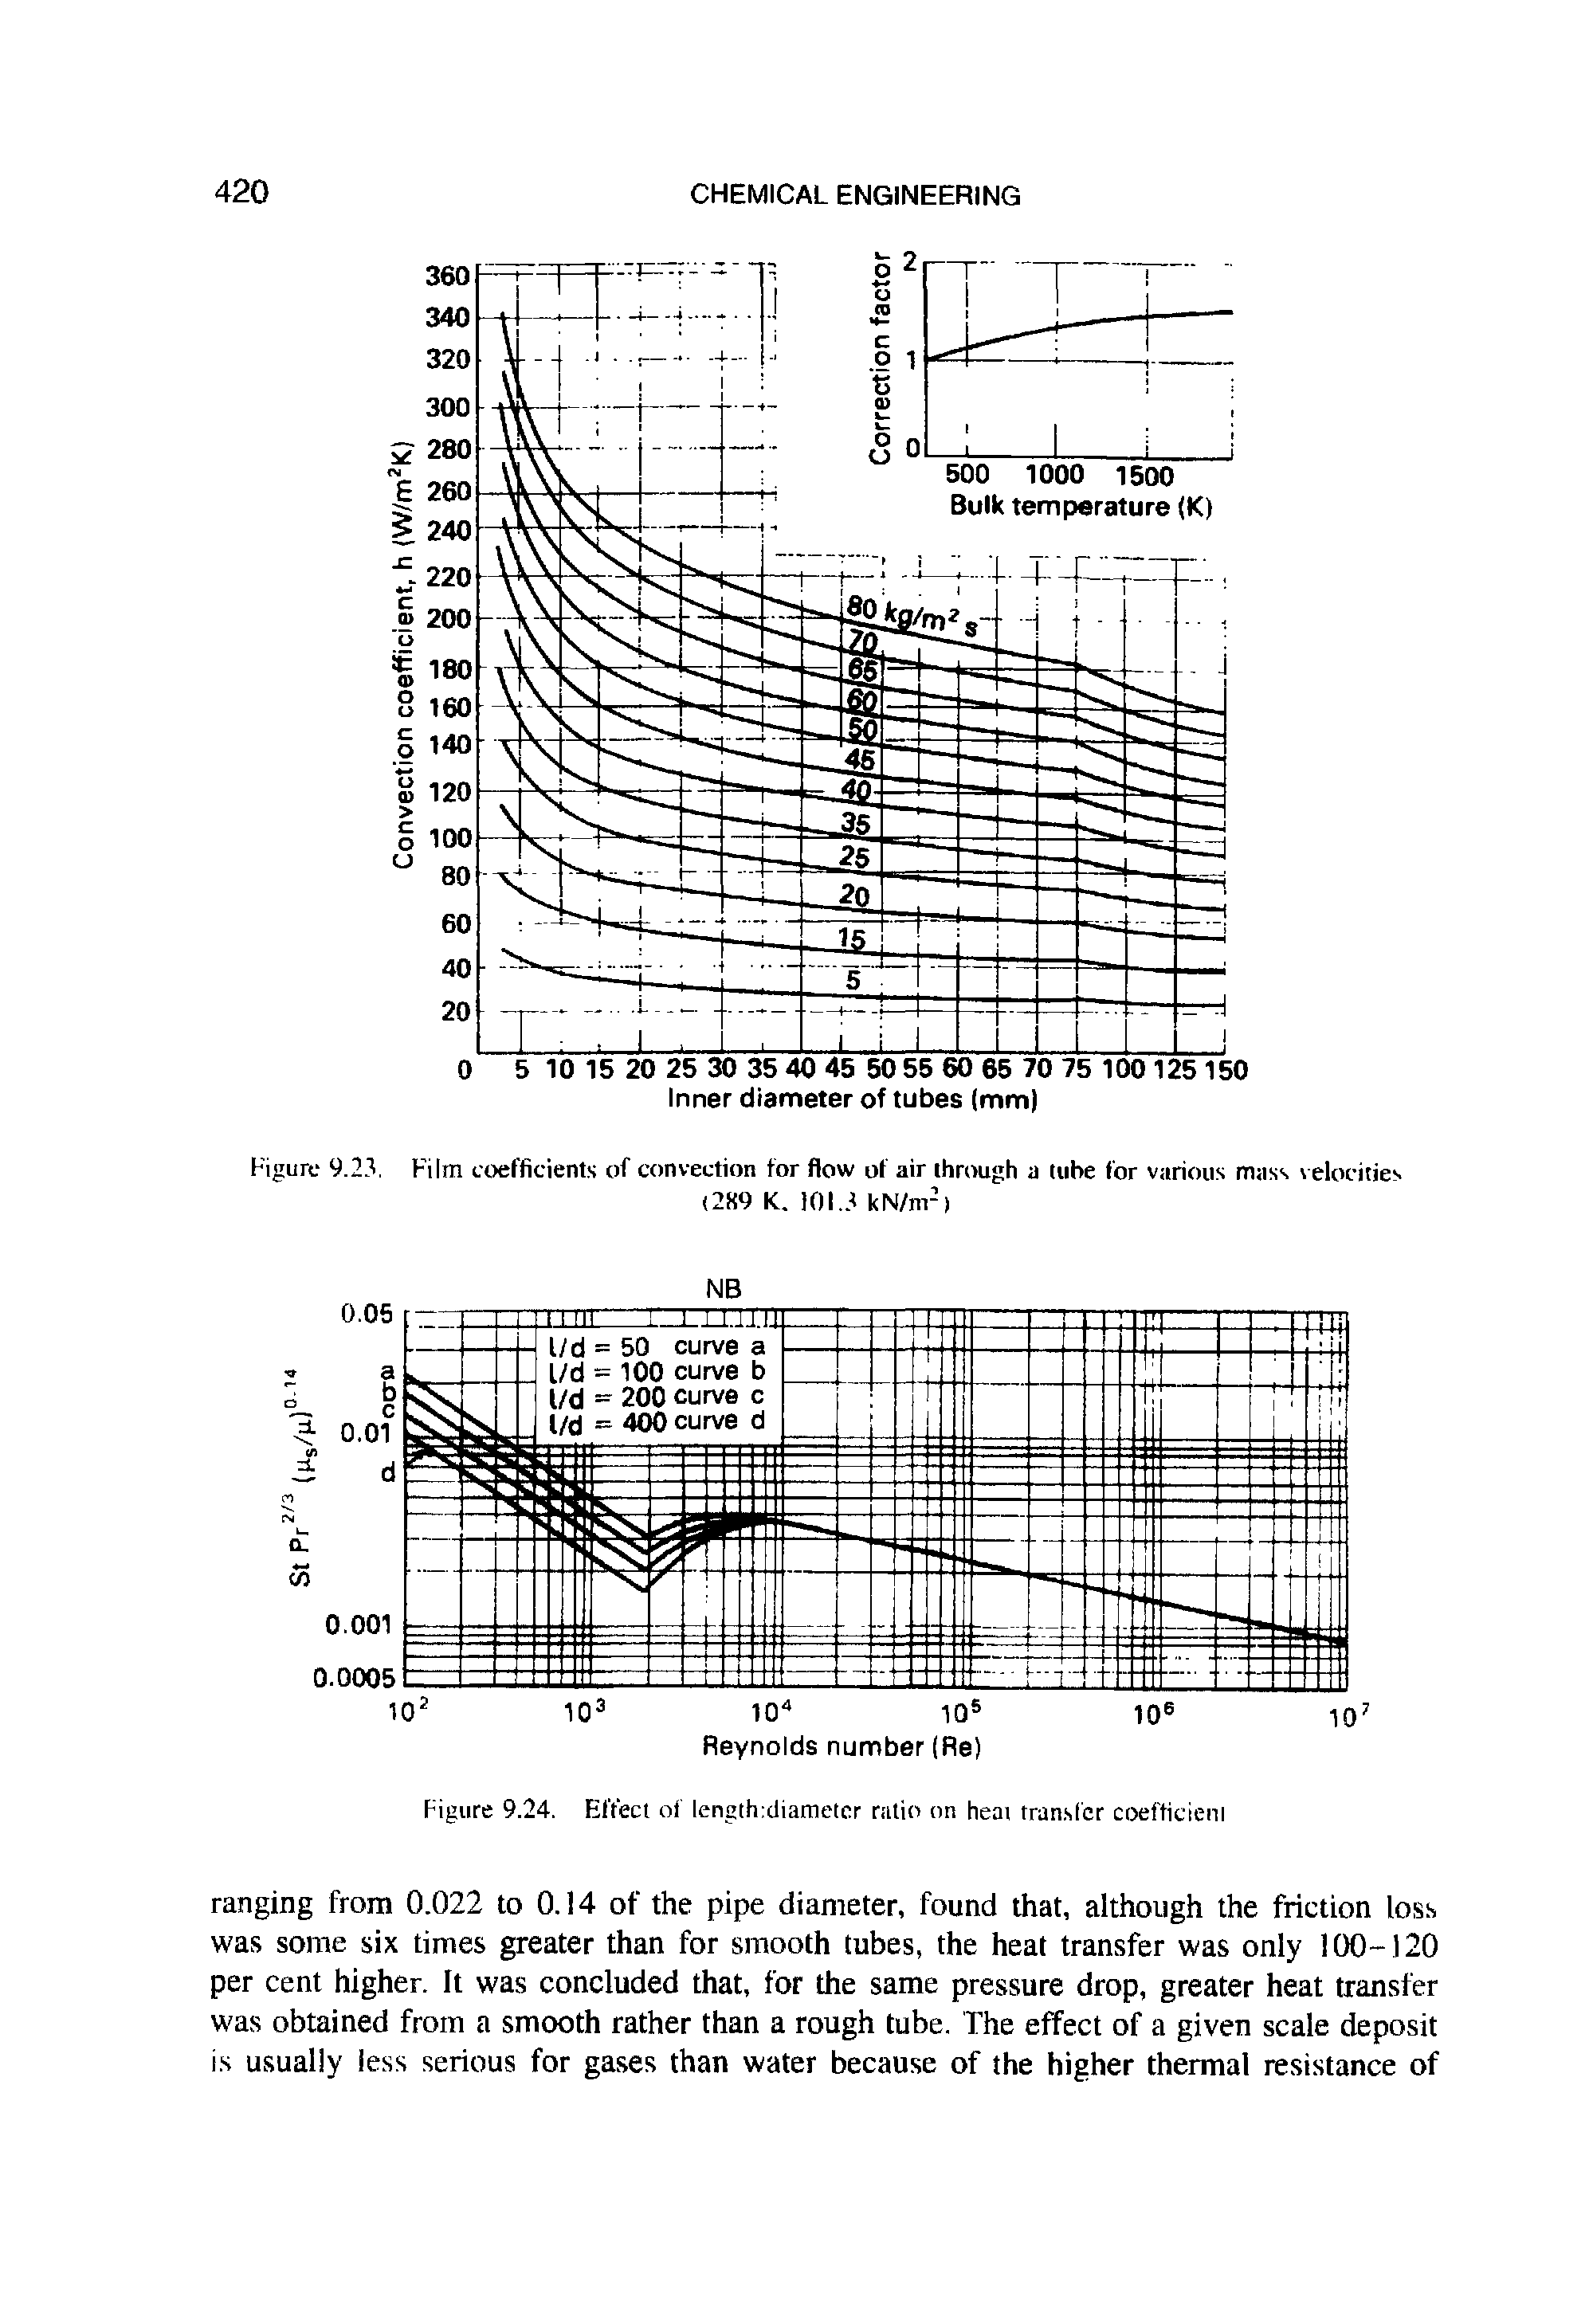 Figure 9.24. Effect of length diameter ratio on heat transfer coefficient...